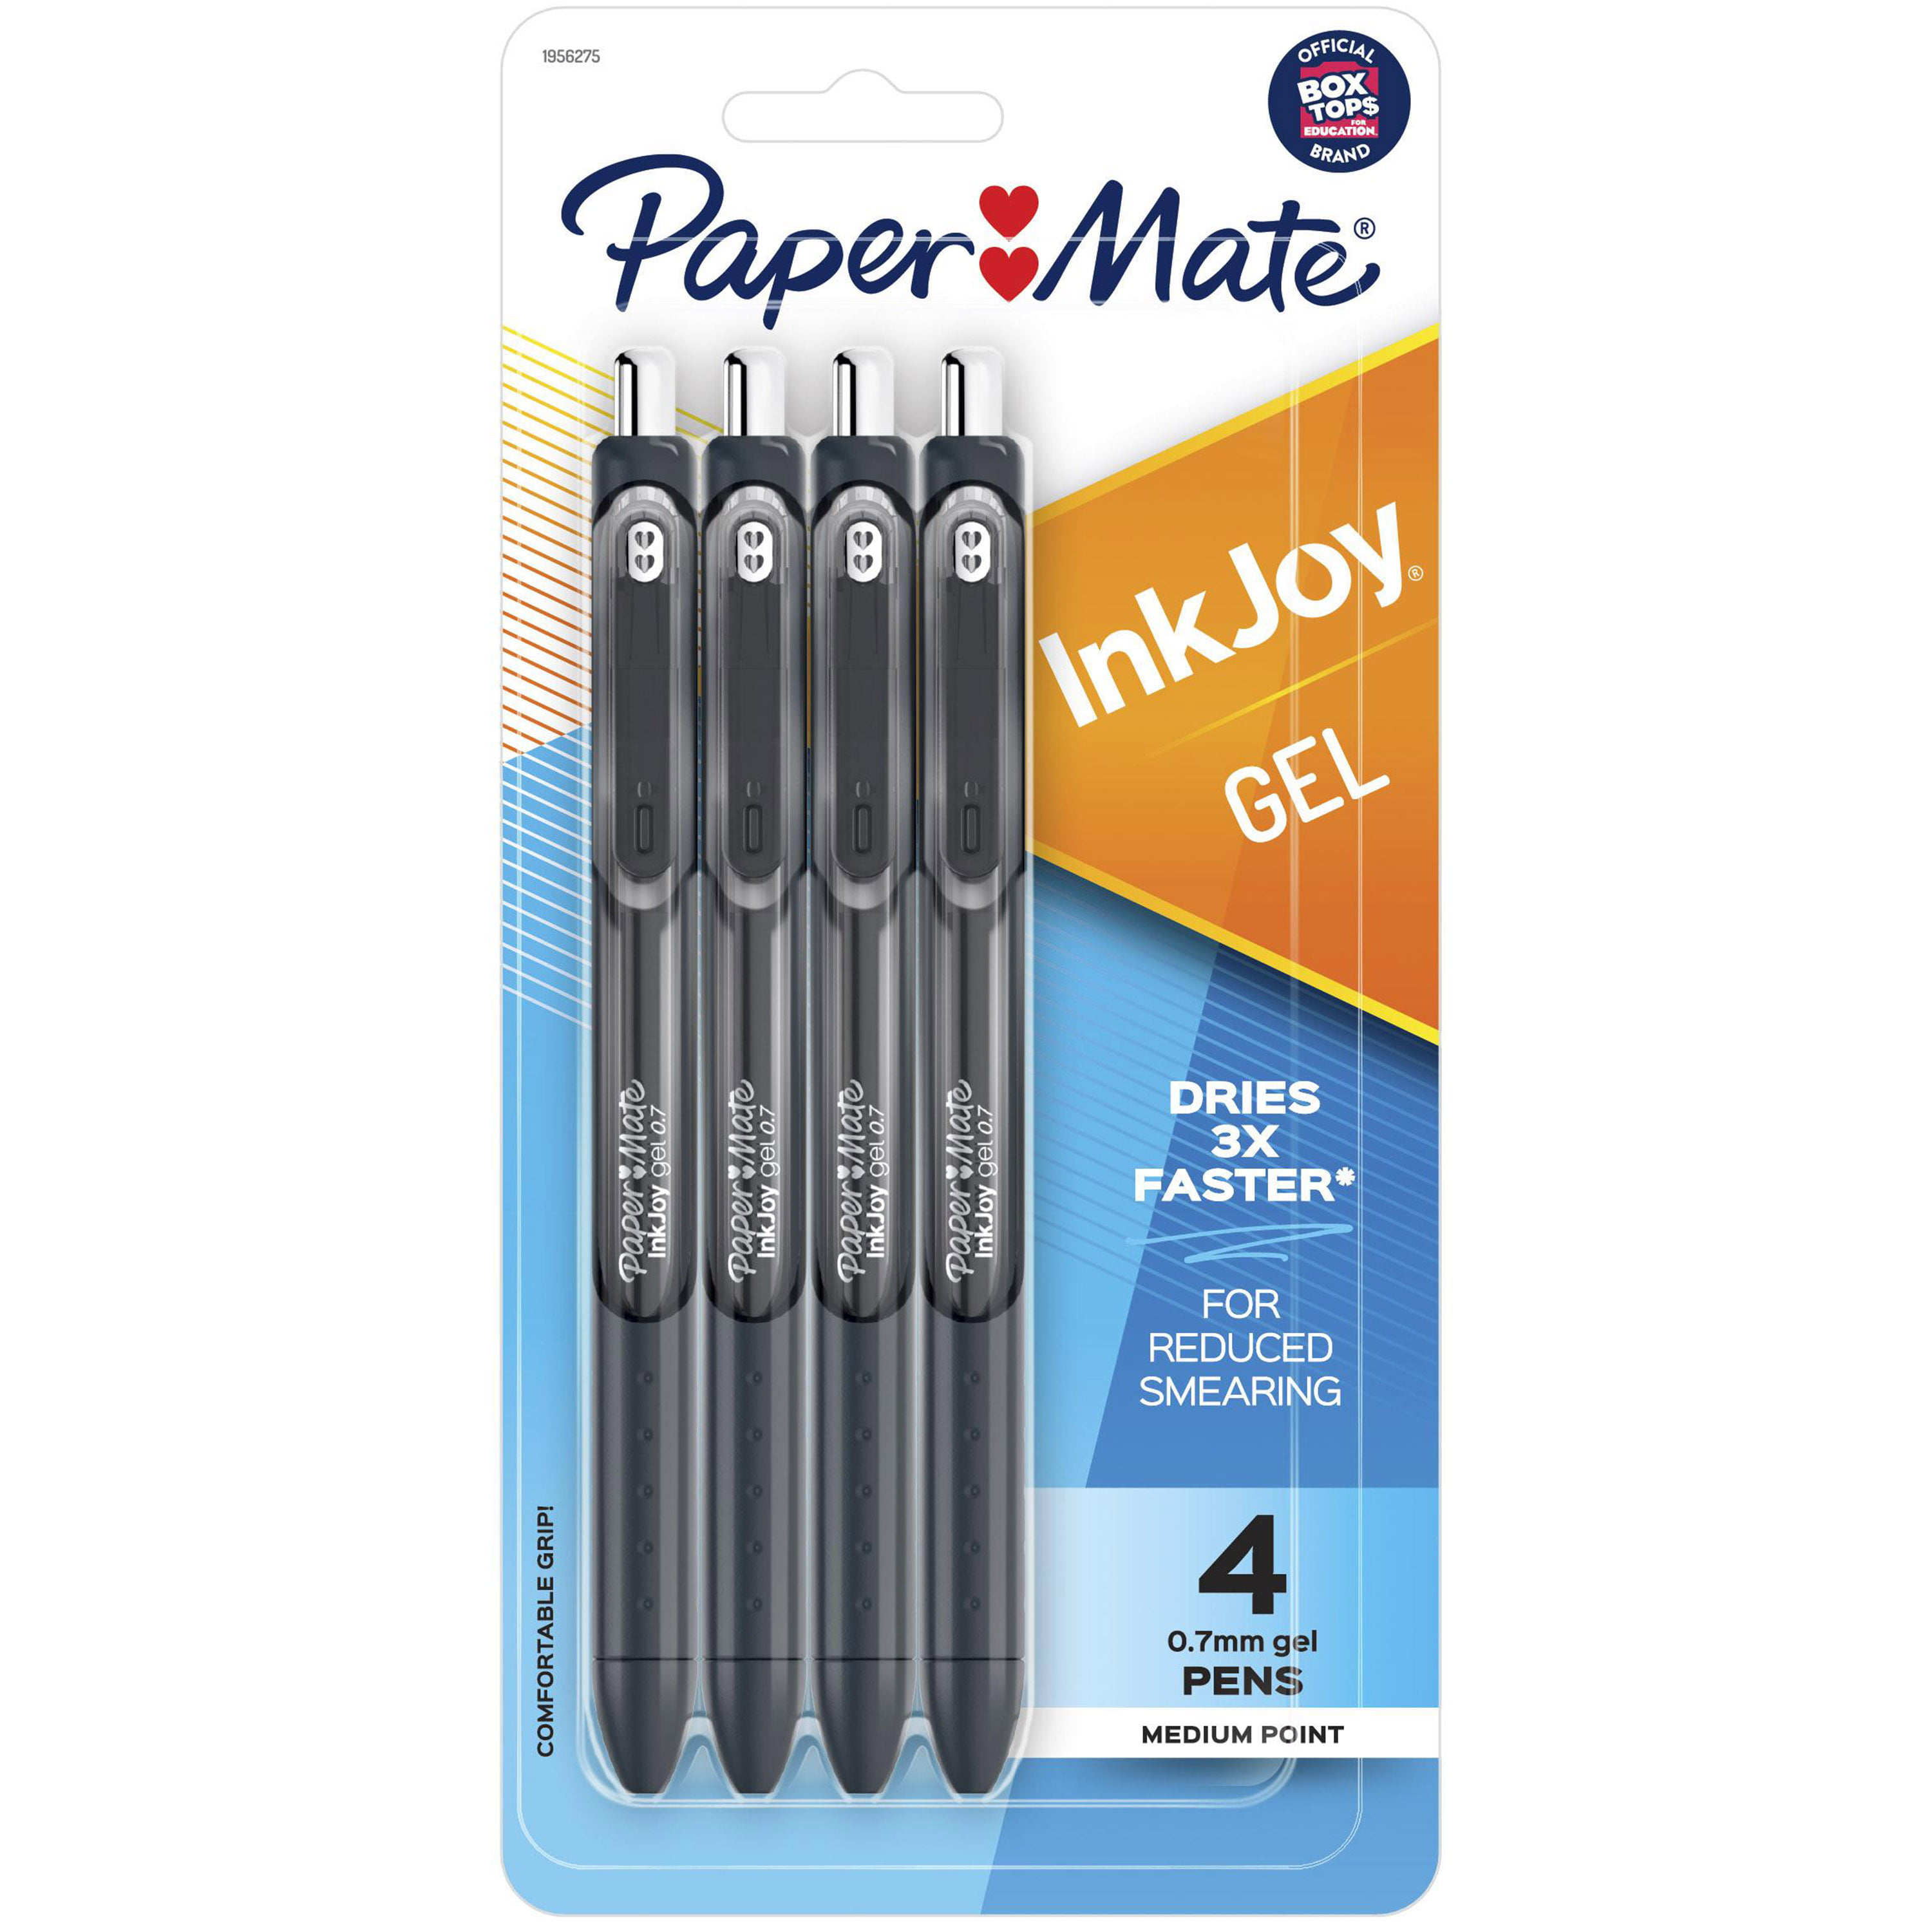 Paper Mate InkJoy Gel Pens - Medium Point - 4 Pack (Black or Assorted colors) $4.24